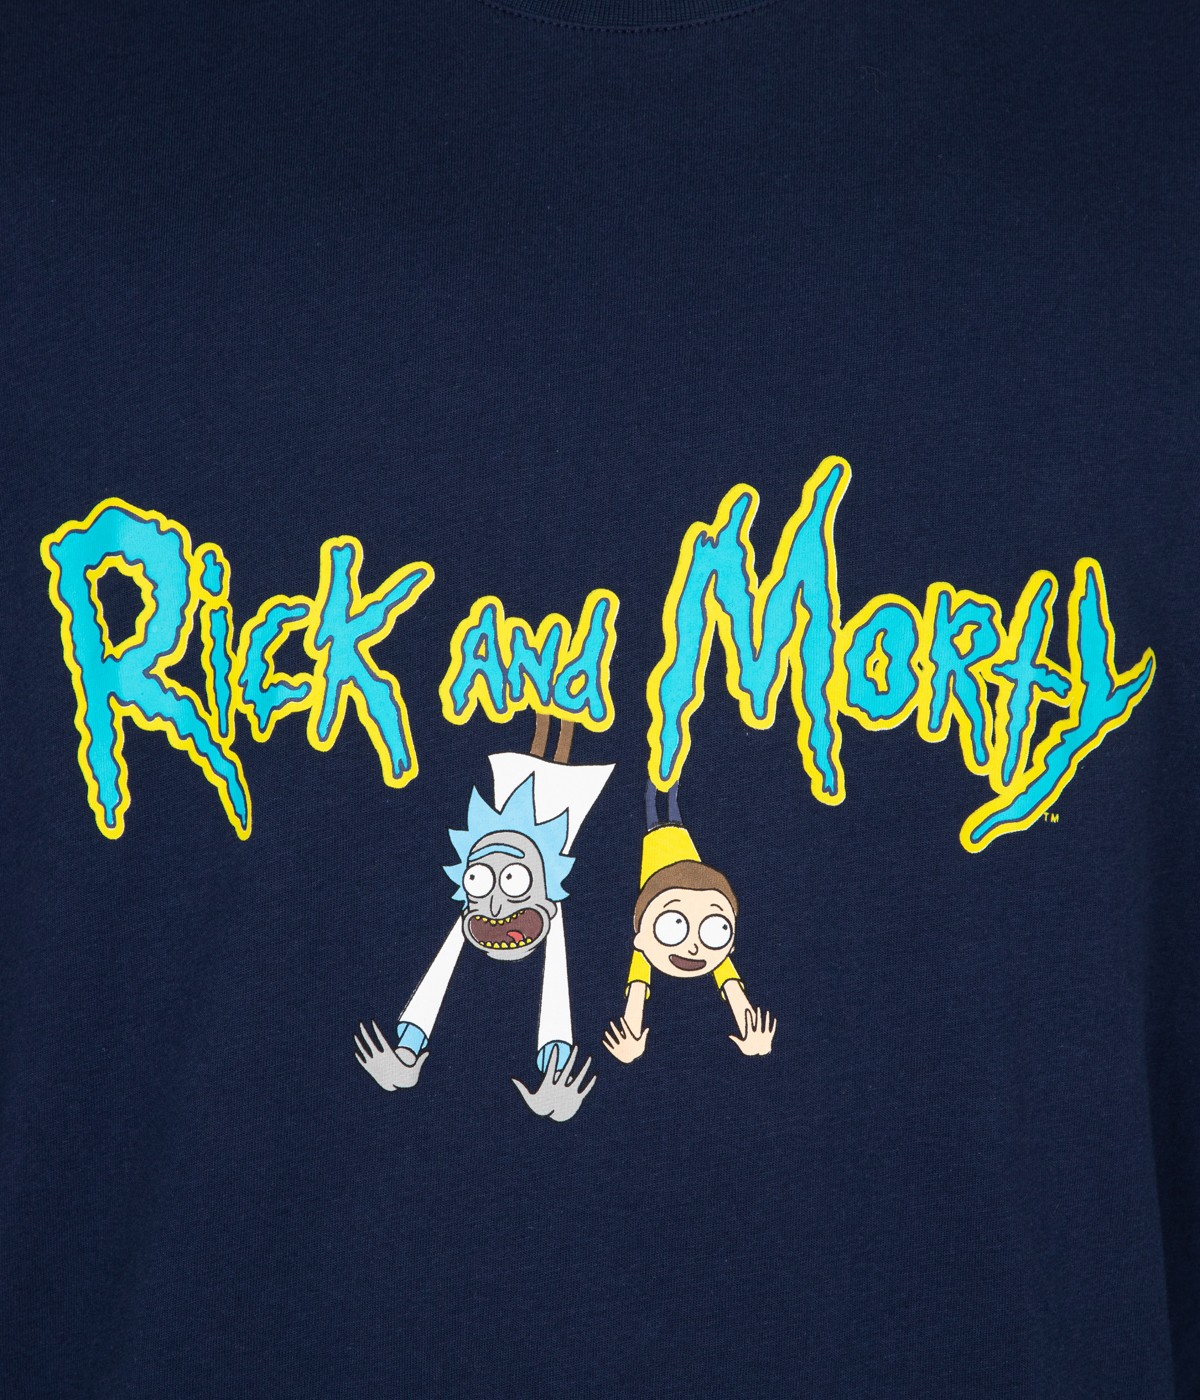 Set Pijama Lic Men Rick and Morty